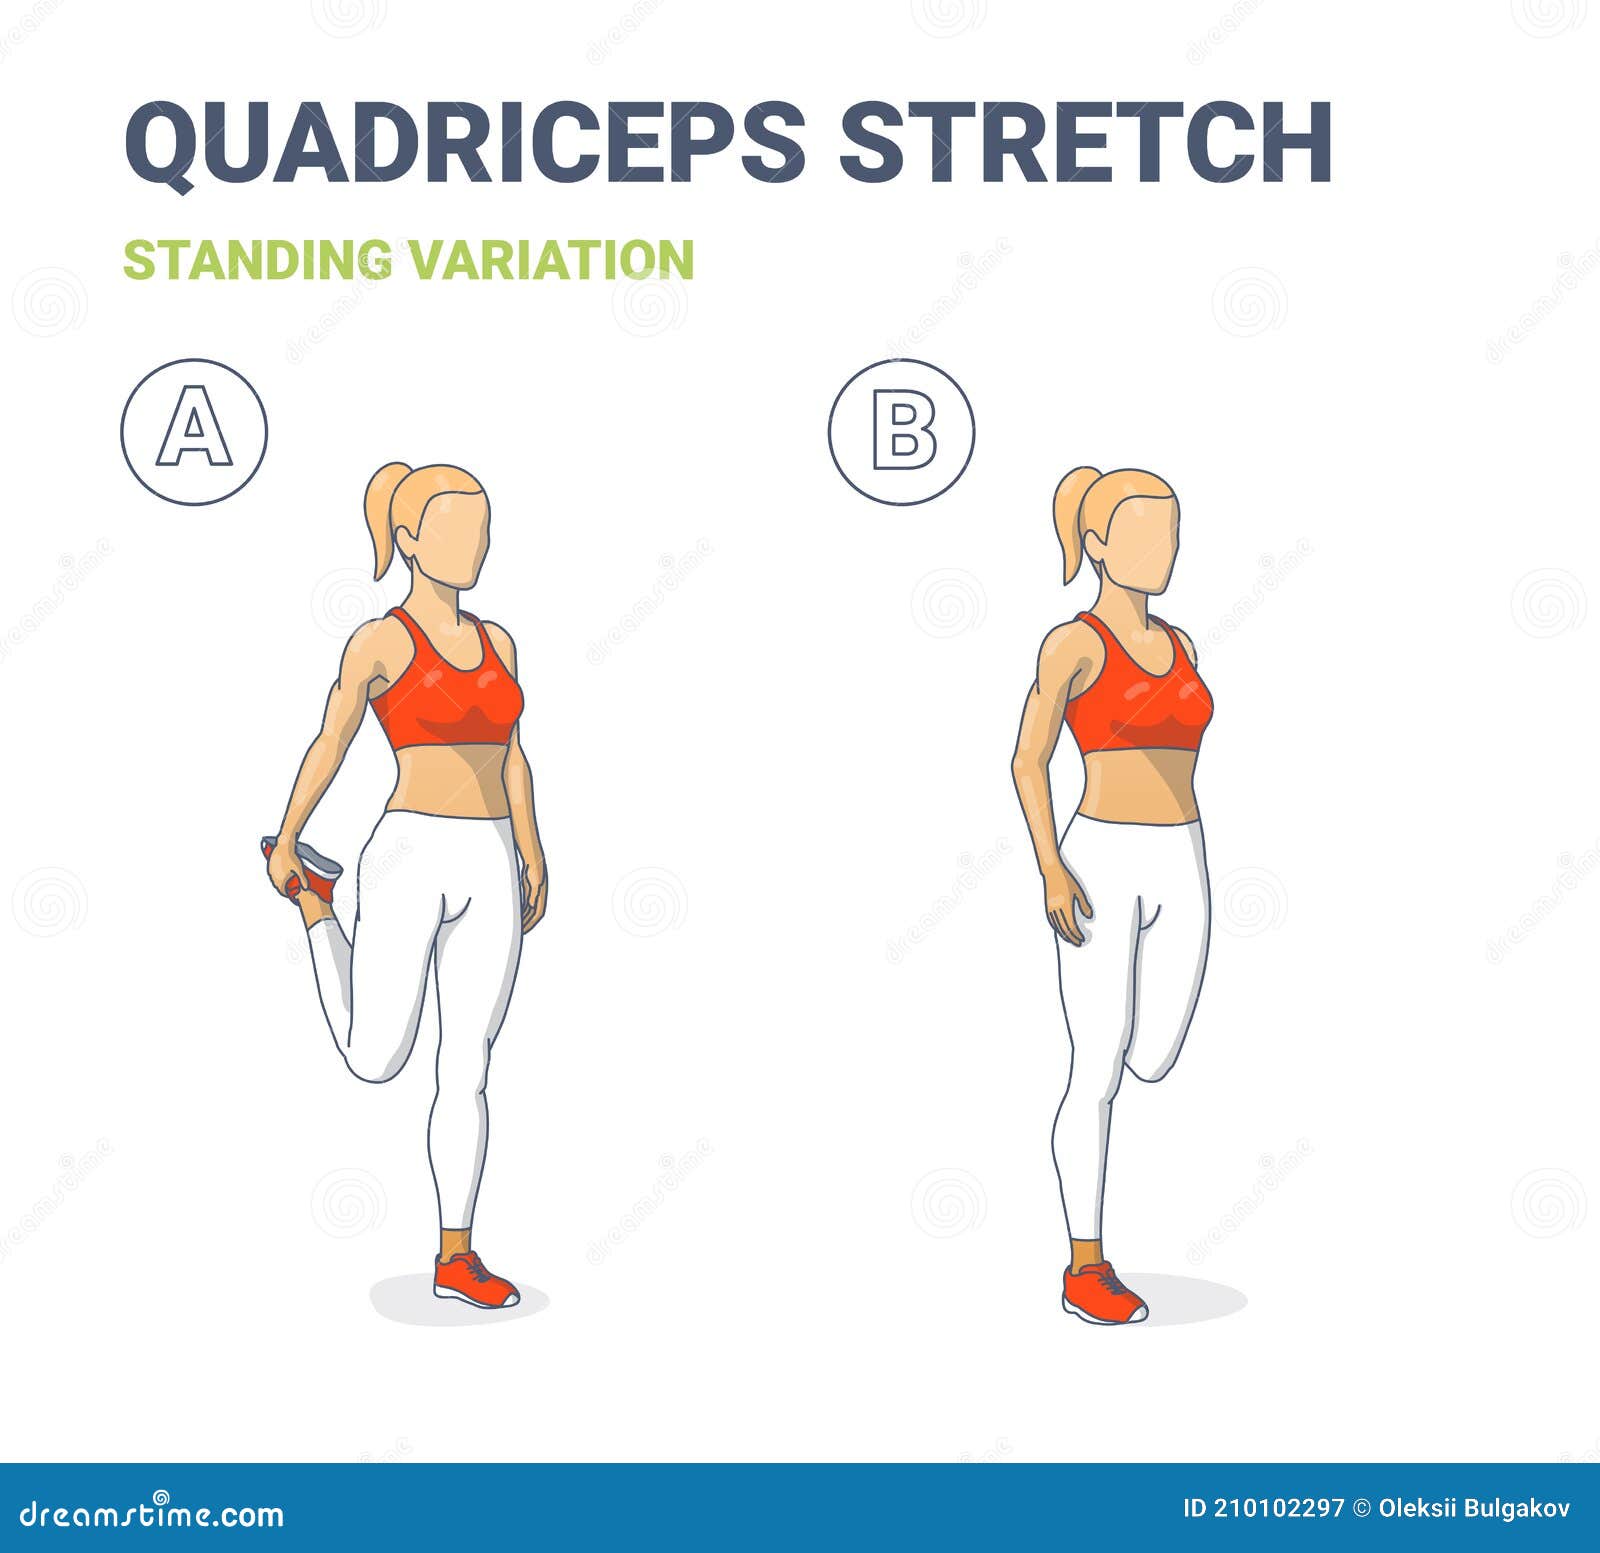 Quadricep Stretch  A Stretching Exercise